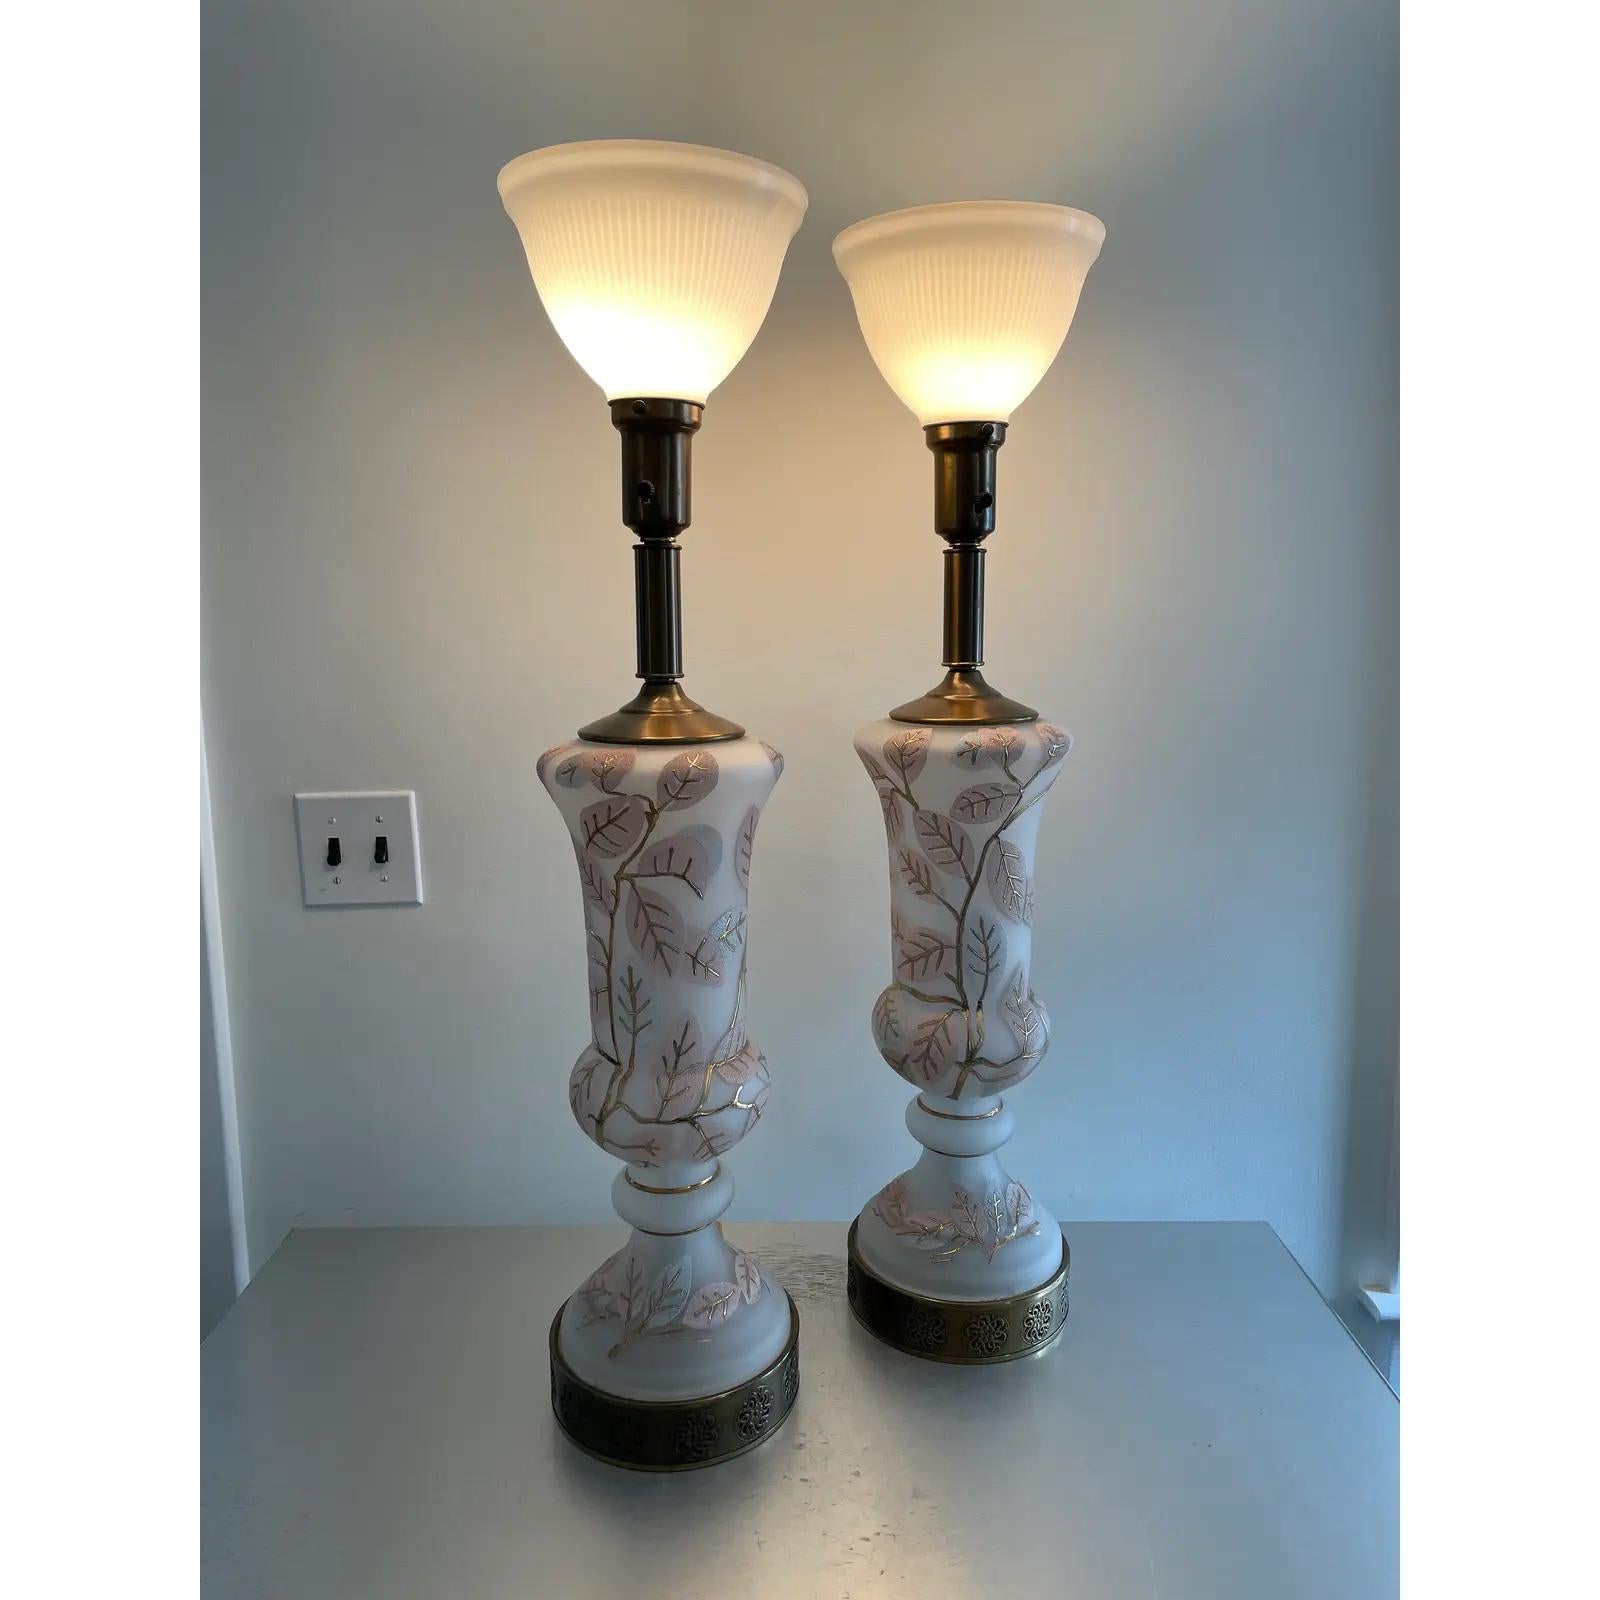  Hollywood Regency Urn Lamps - a Pair 1